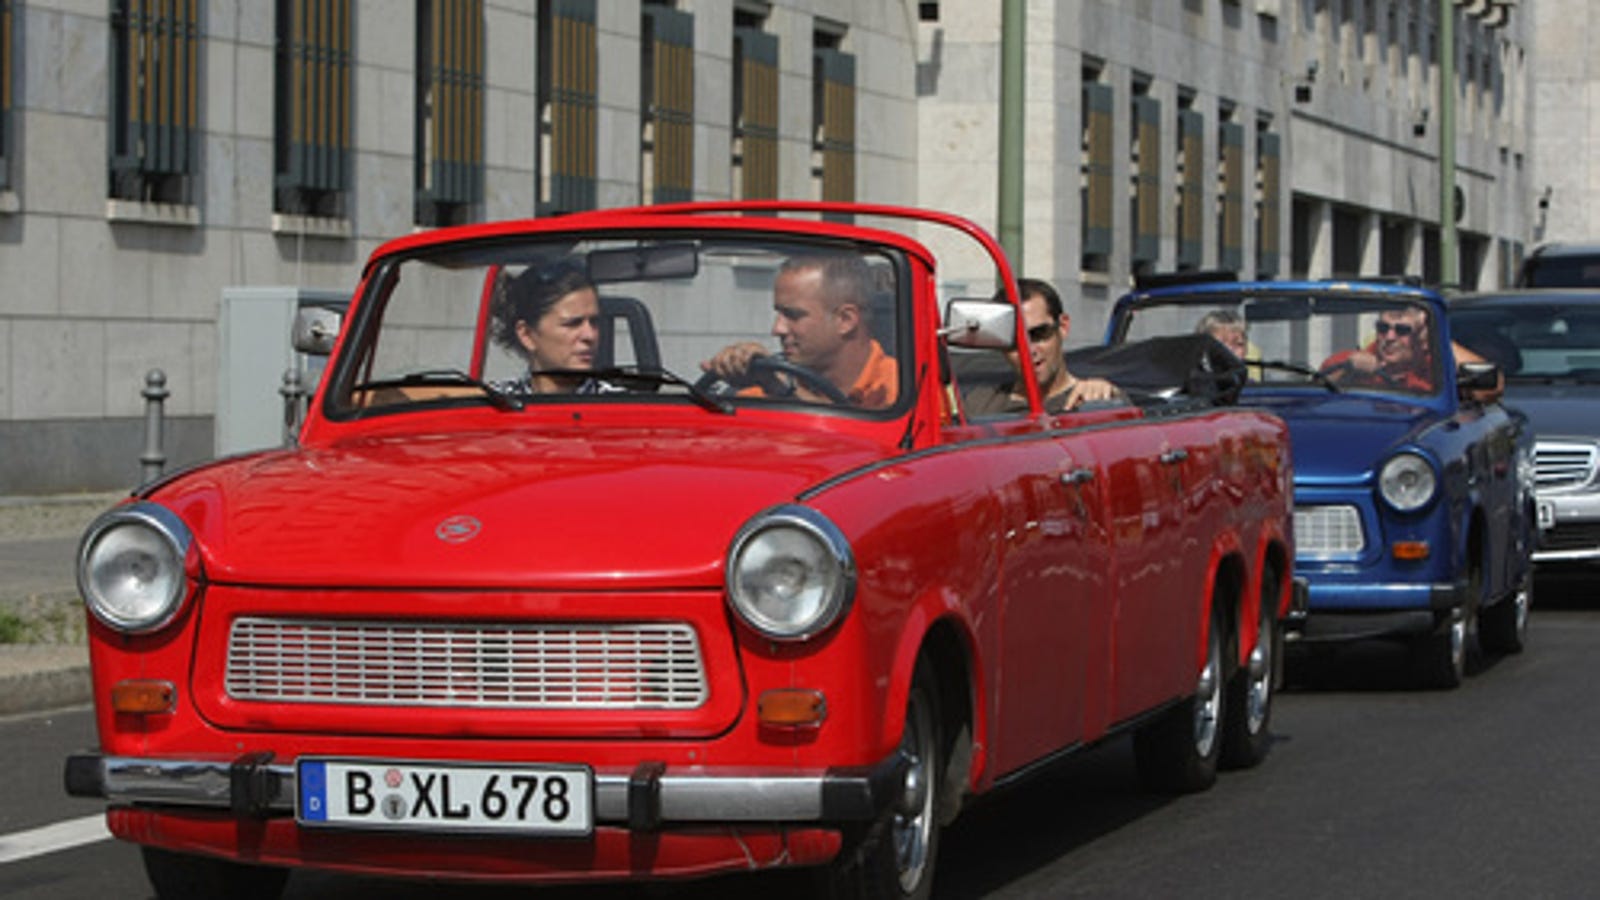 trabant tour of berlin